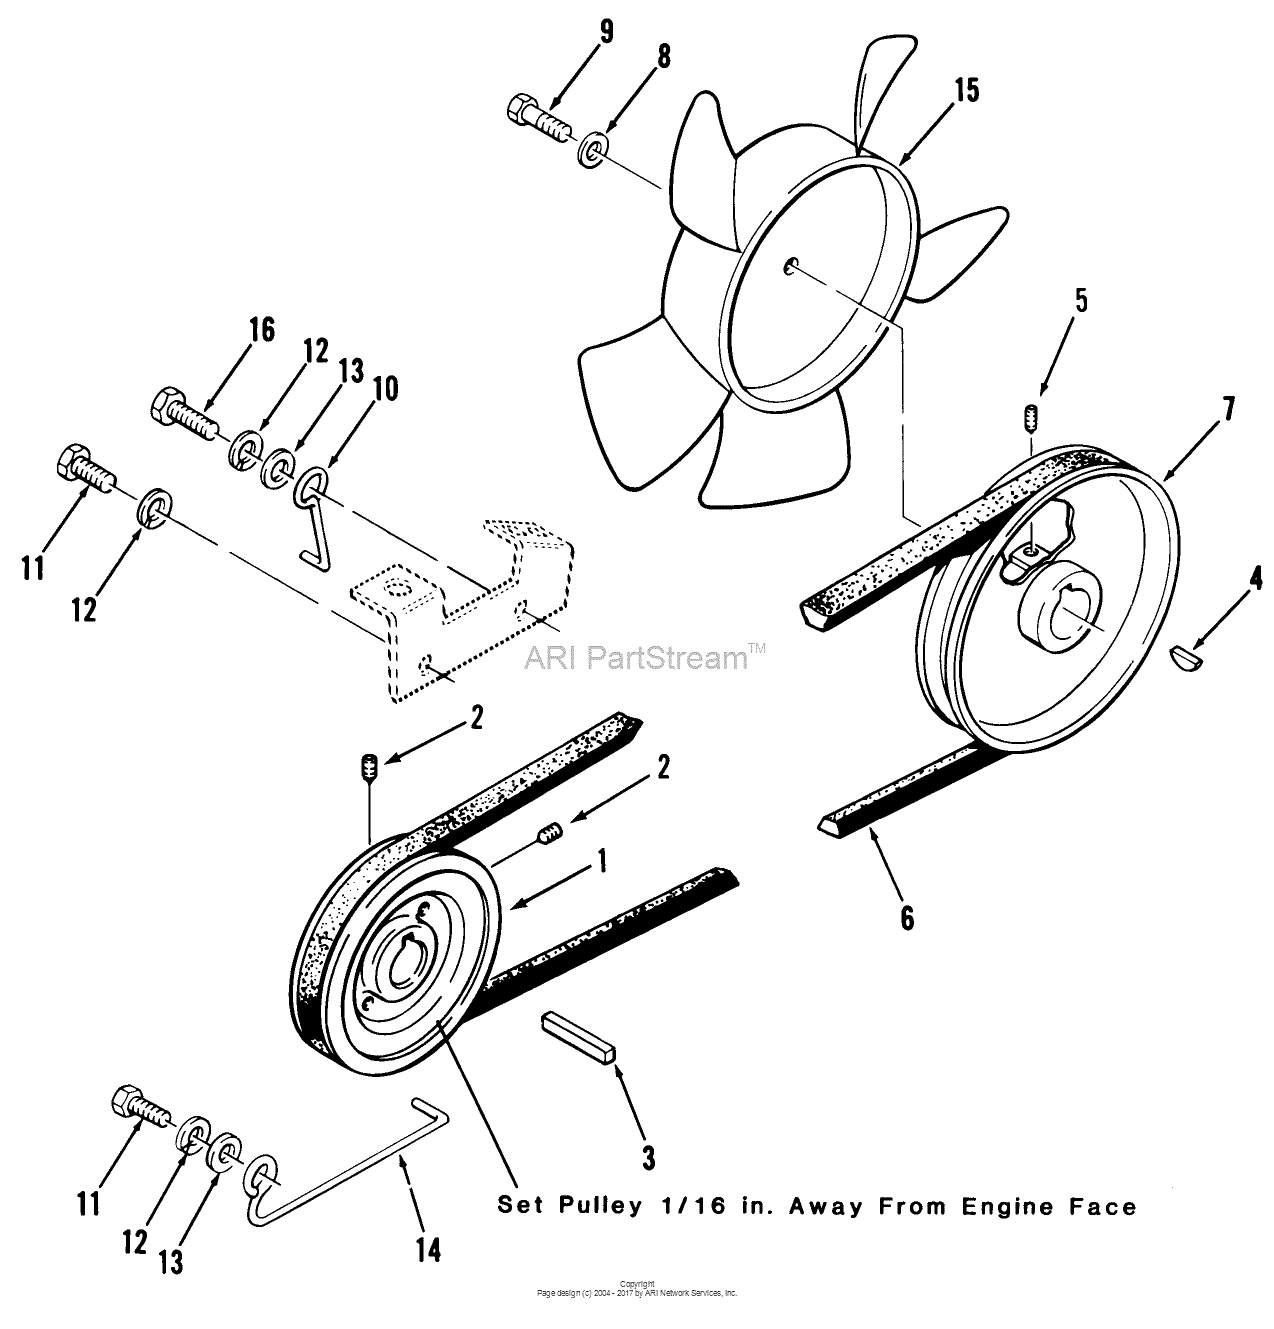 Toro 31-14K801, 414-8 Garden Tractor, 1986 Parts Diagram for DRIVE BELT AND PULLEYS1274 x 1329